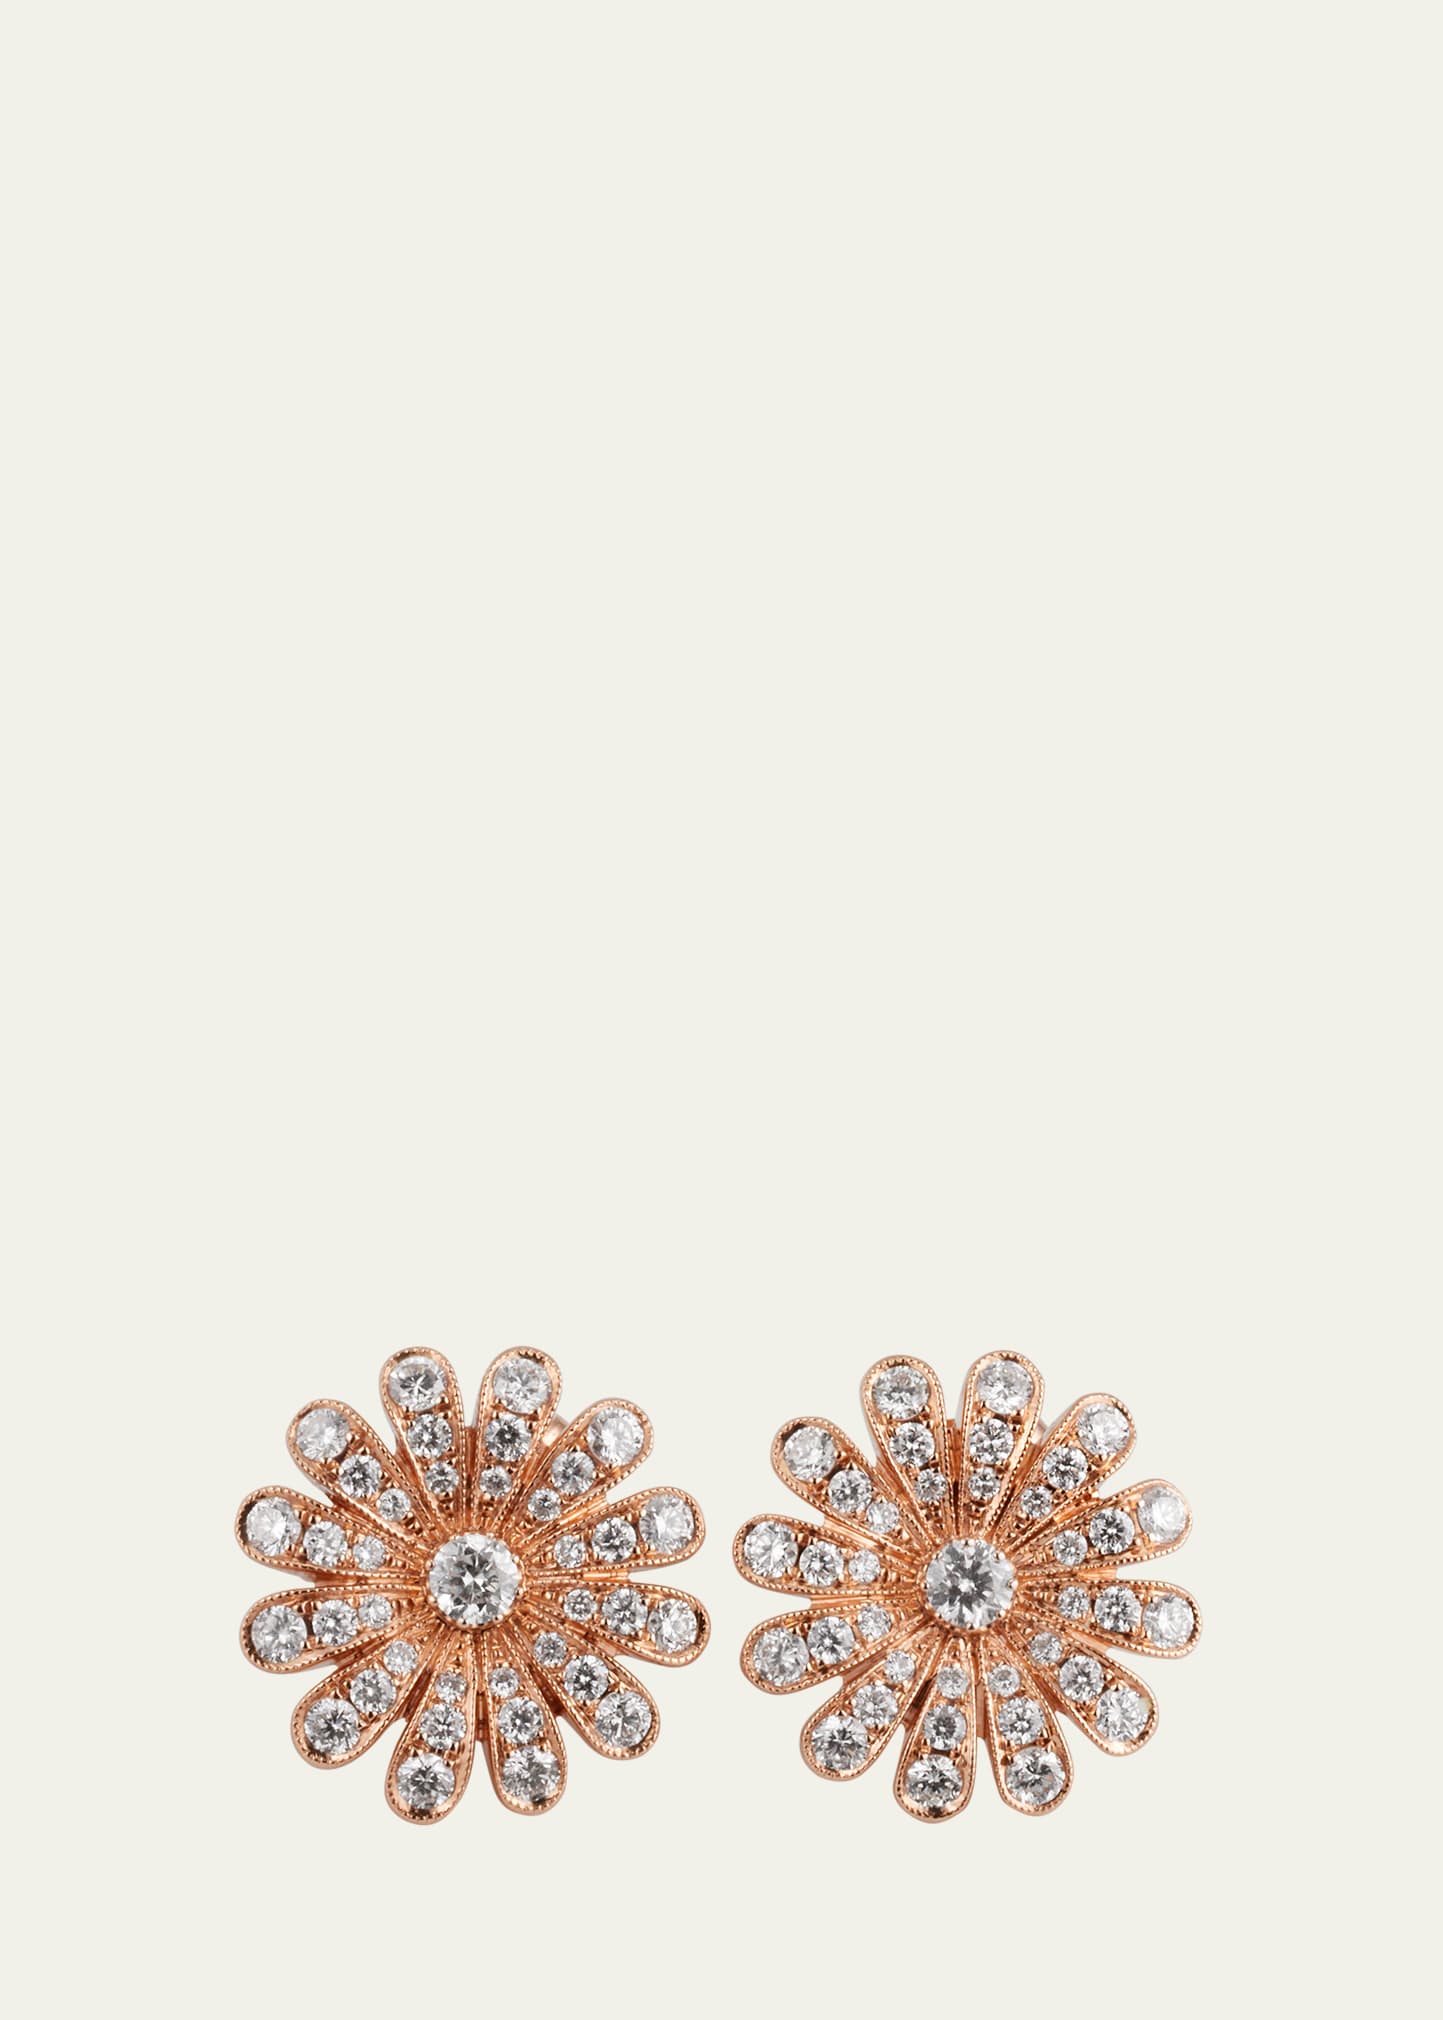 18K Rose Gold Daisy Earrings with Diamonds